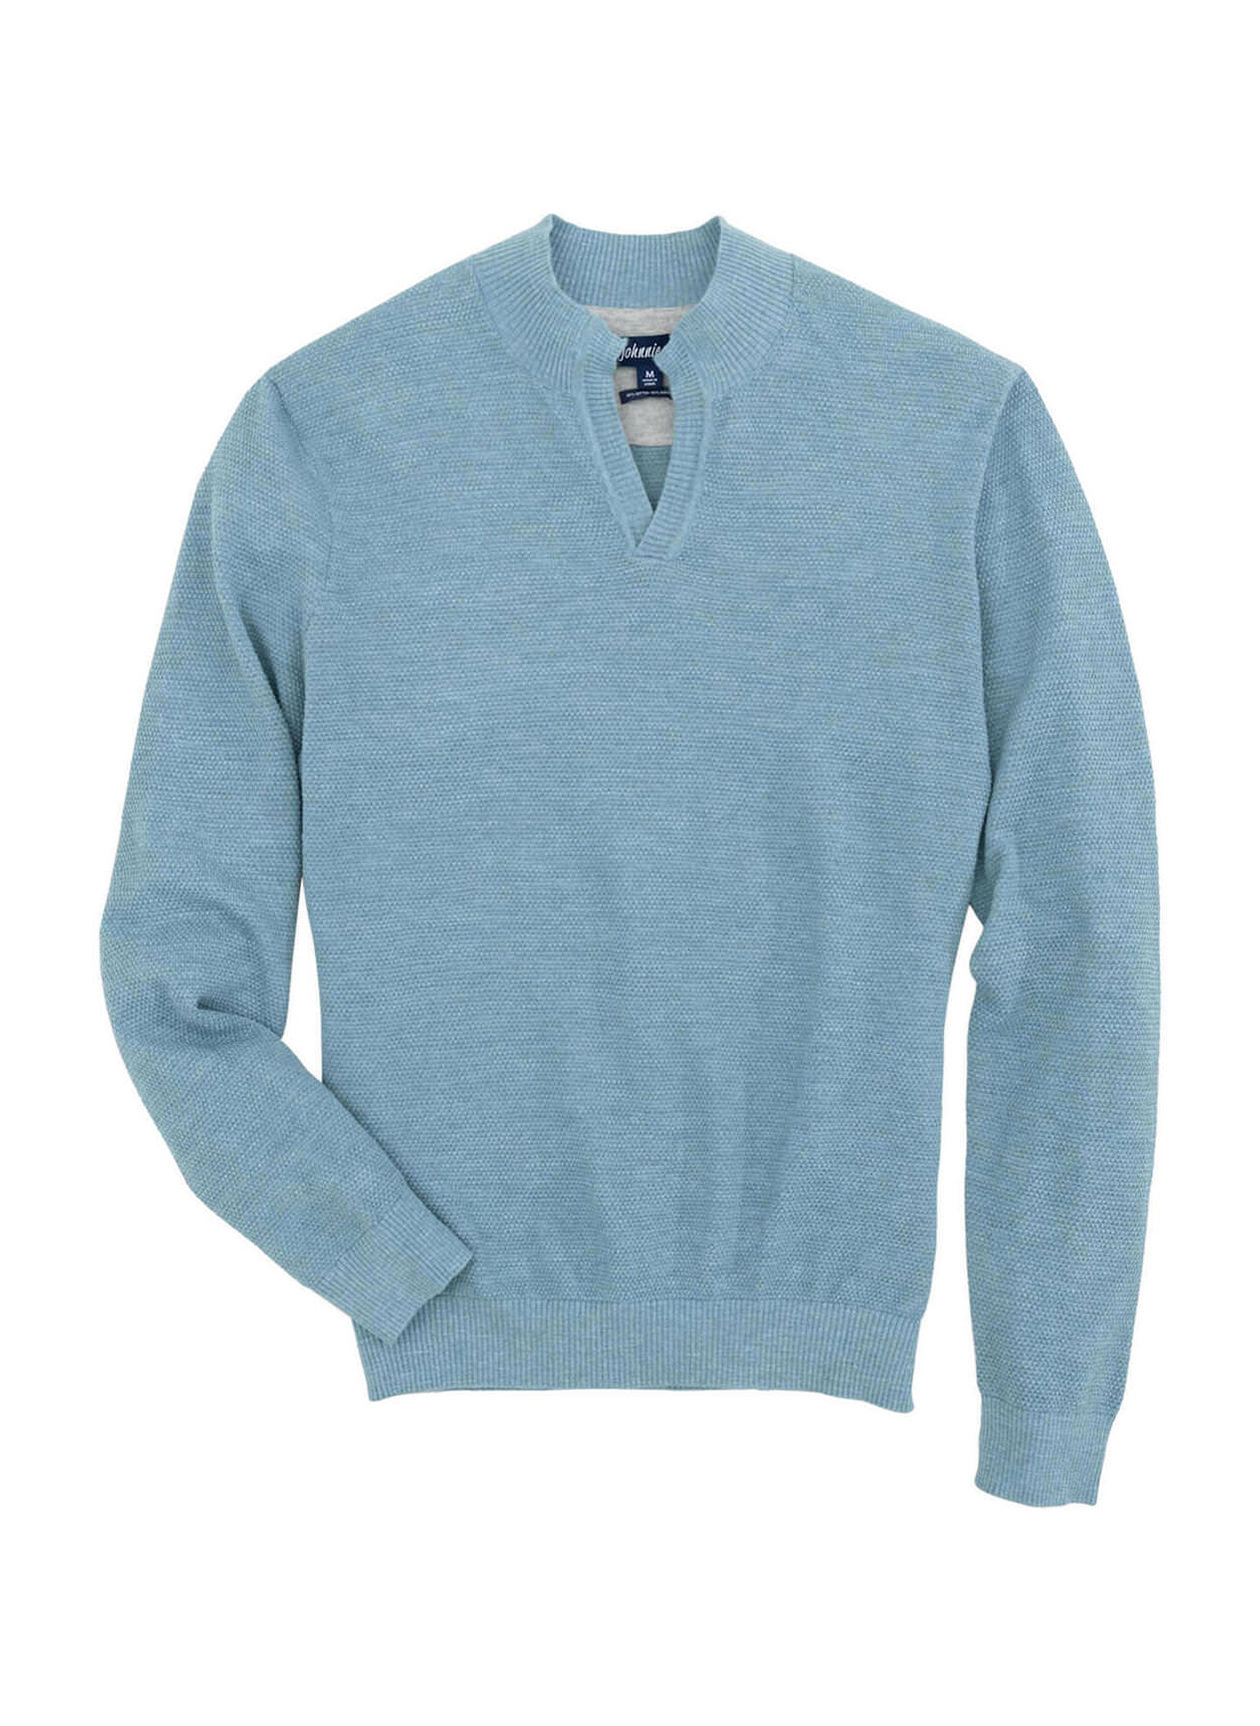 Johnnie-O Men's Seaglass Belmore Sweater